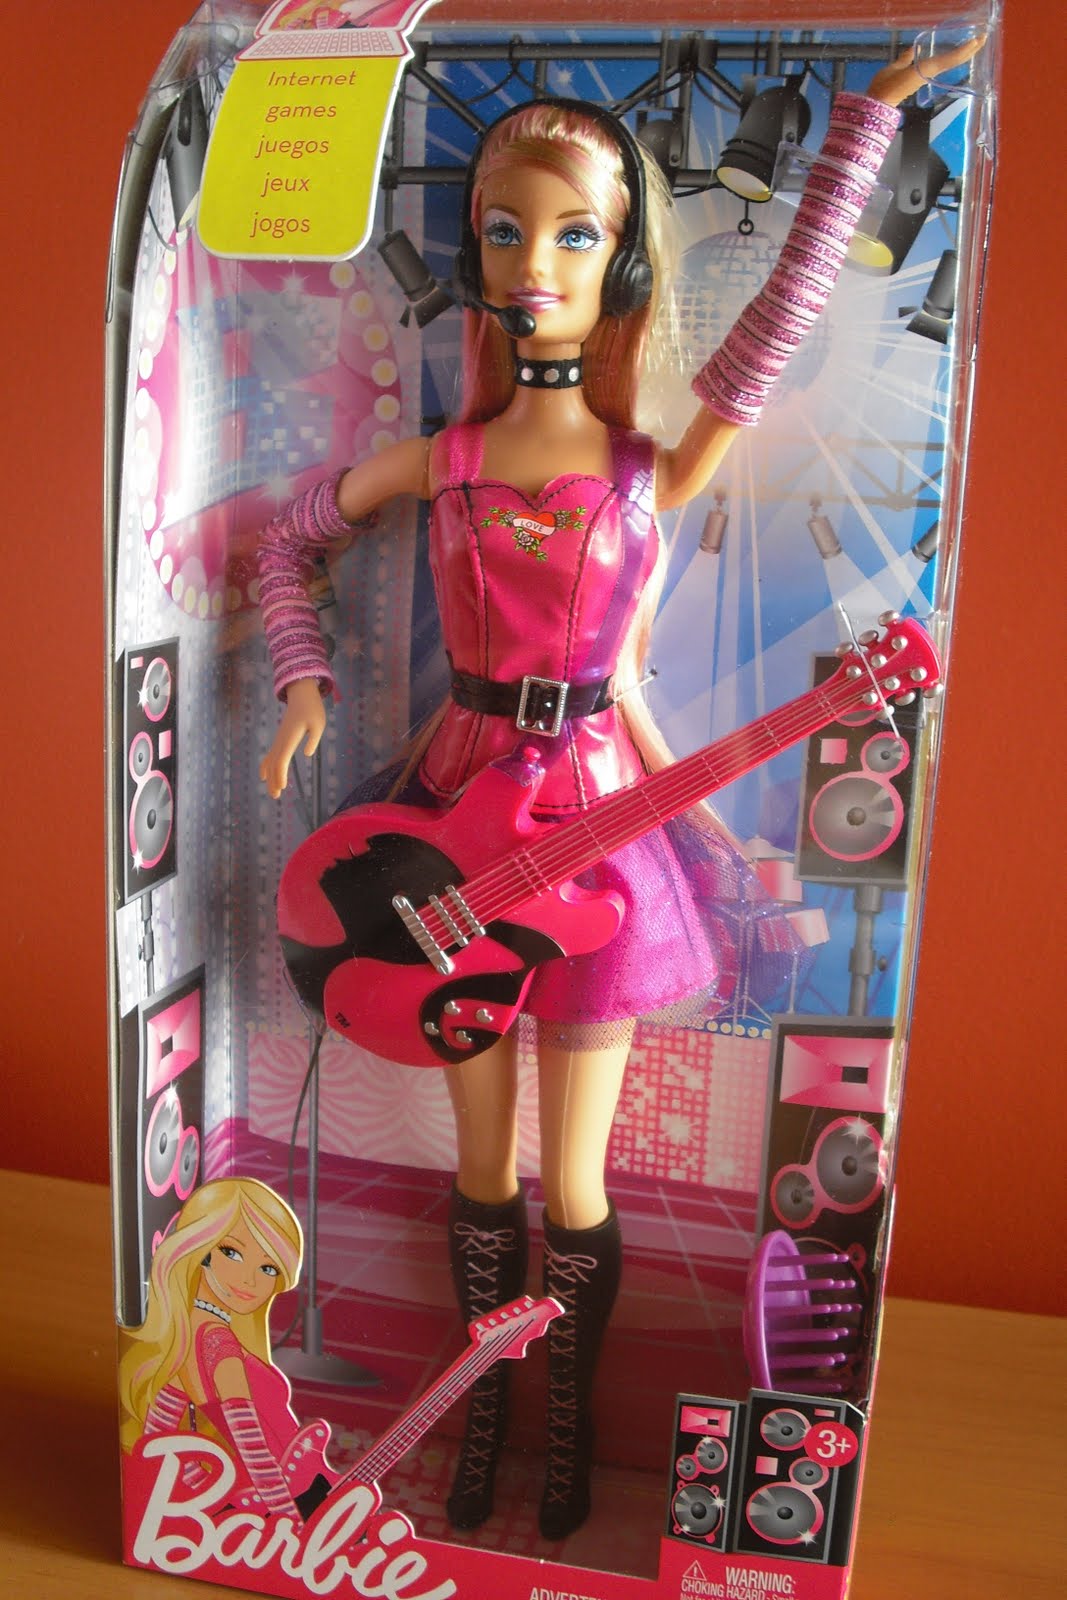 Barbie, EternamenteBarbara!: BARBIE QUERO SERESTRELA De ROCK